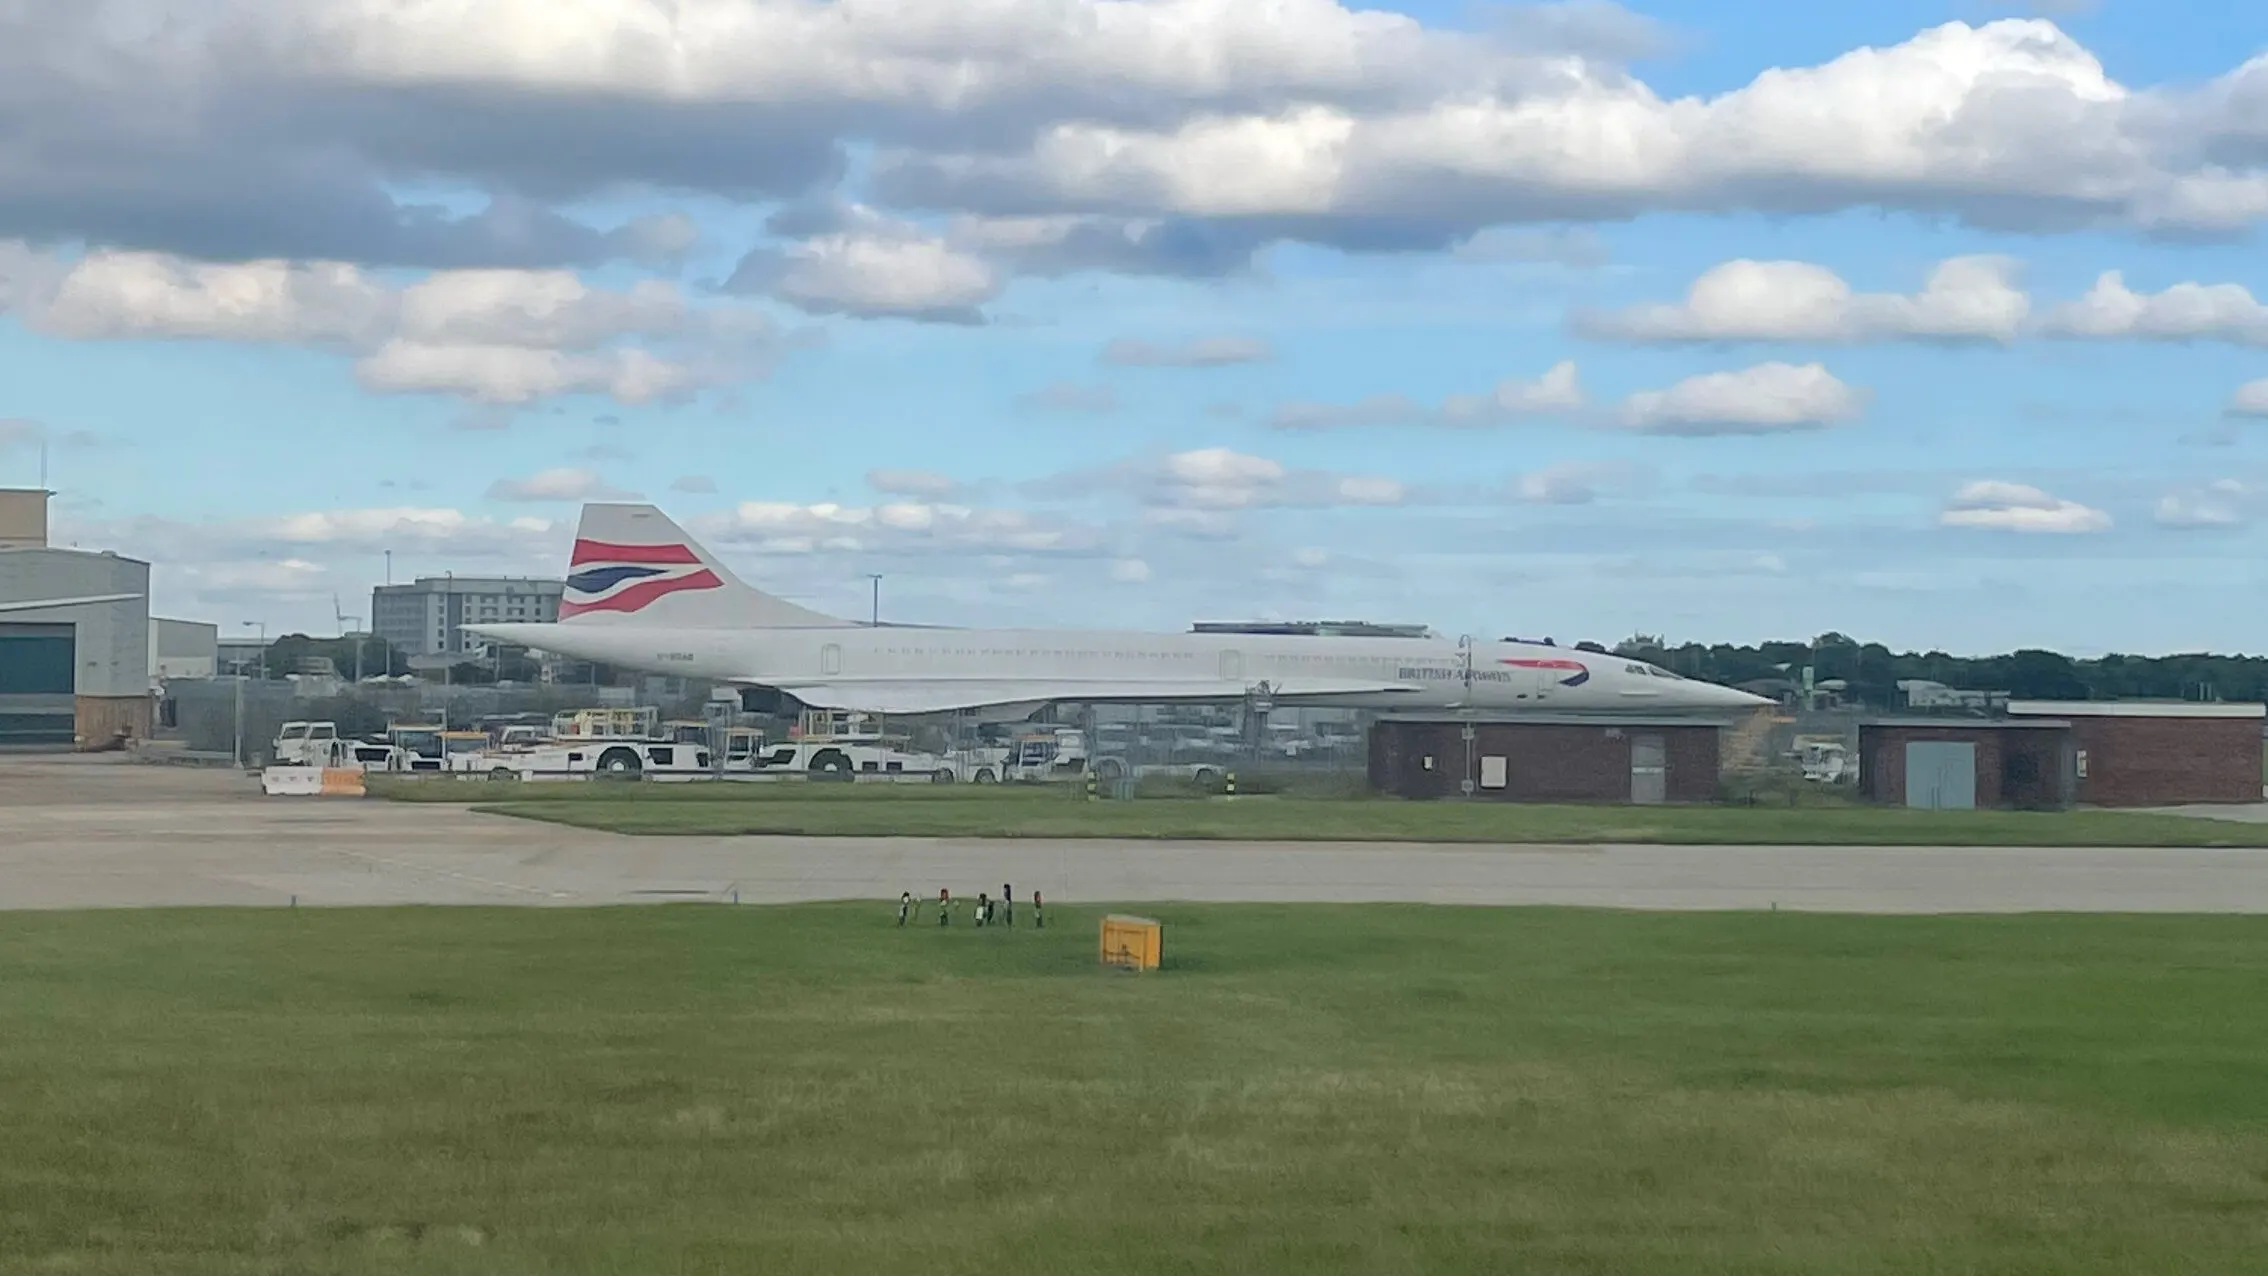 British Airways Concorde at London Heathrow